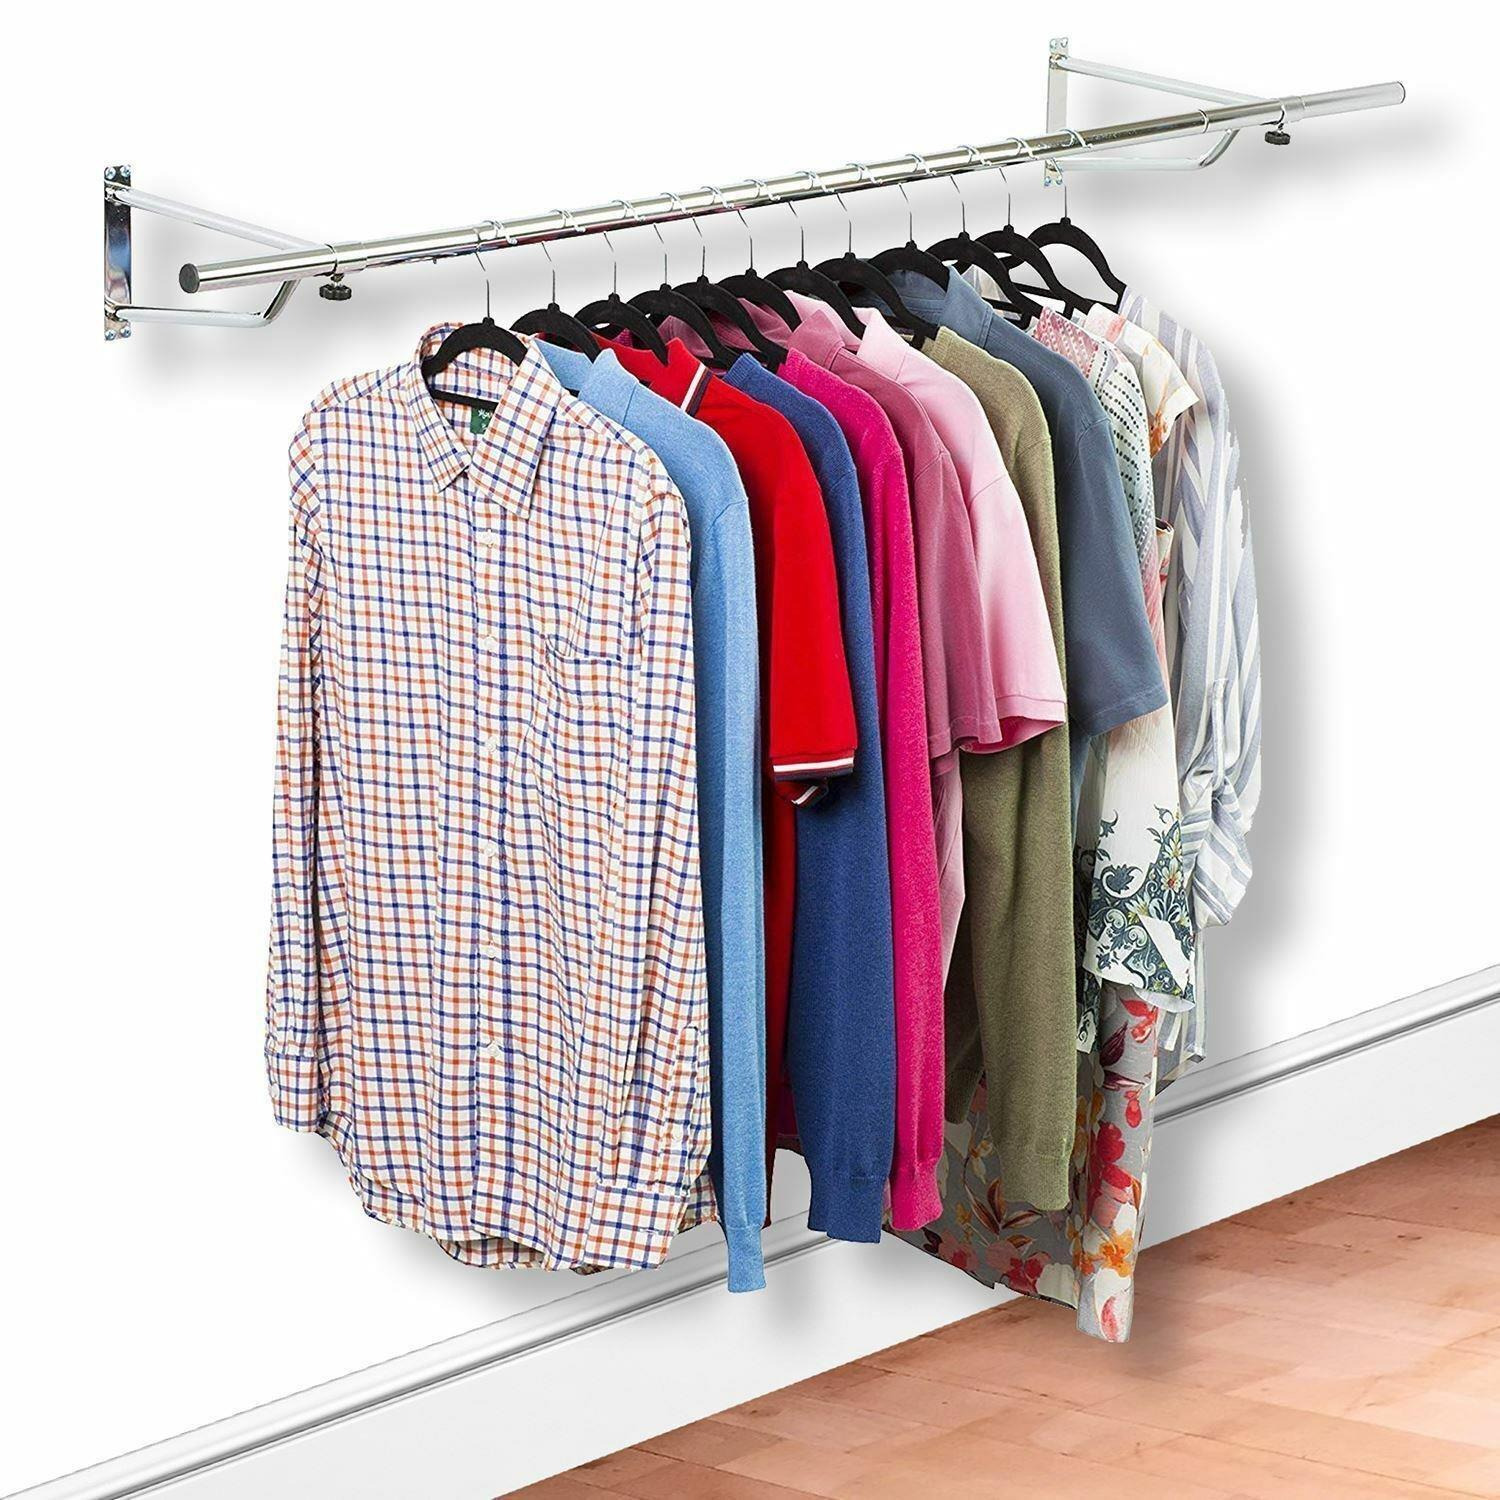 Clothes Rail Wall Mounted Garment Hanging Wardrobe Rack Storage 5ft Length - image 1